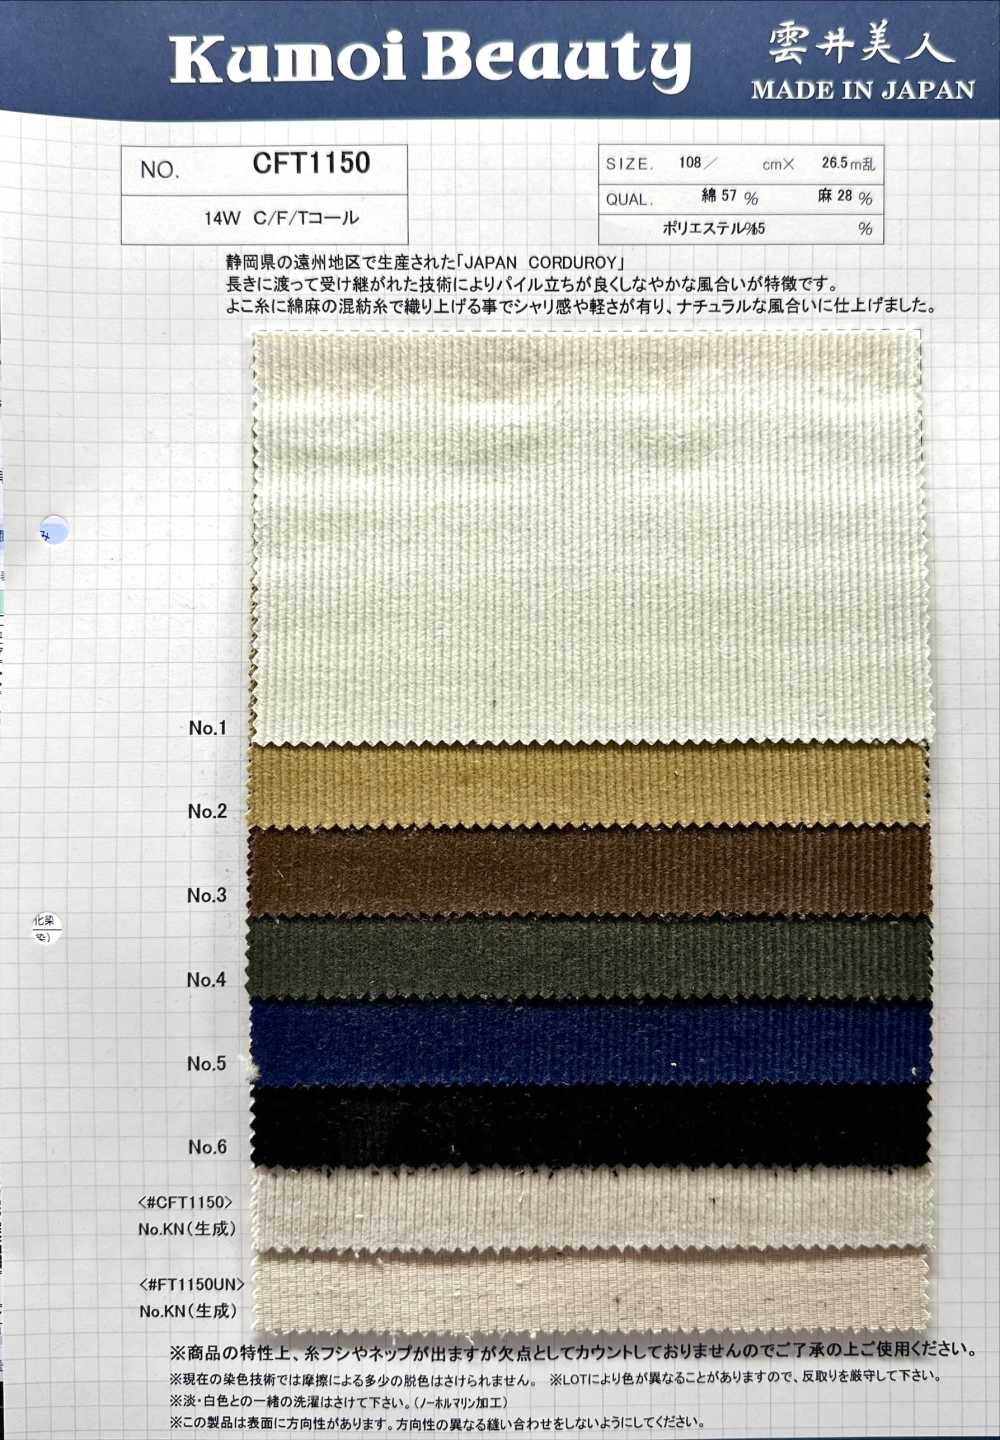 CFT1150 Fancy Pana(Set) Delavage [outlet][Fabrica Textil] Kumoi Beauty (Pana De Terciopelo Chubu)